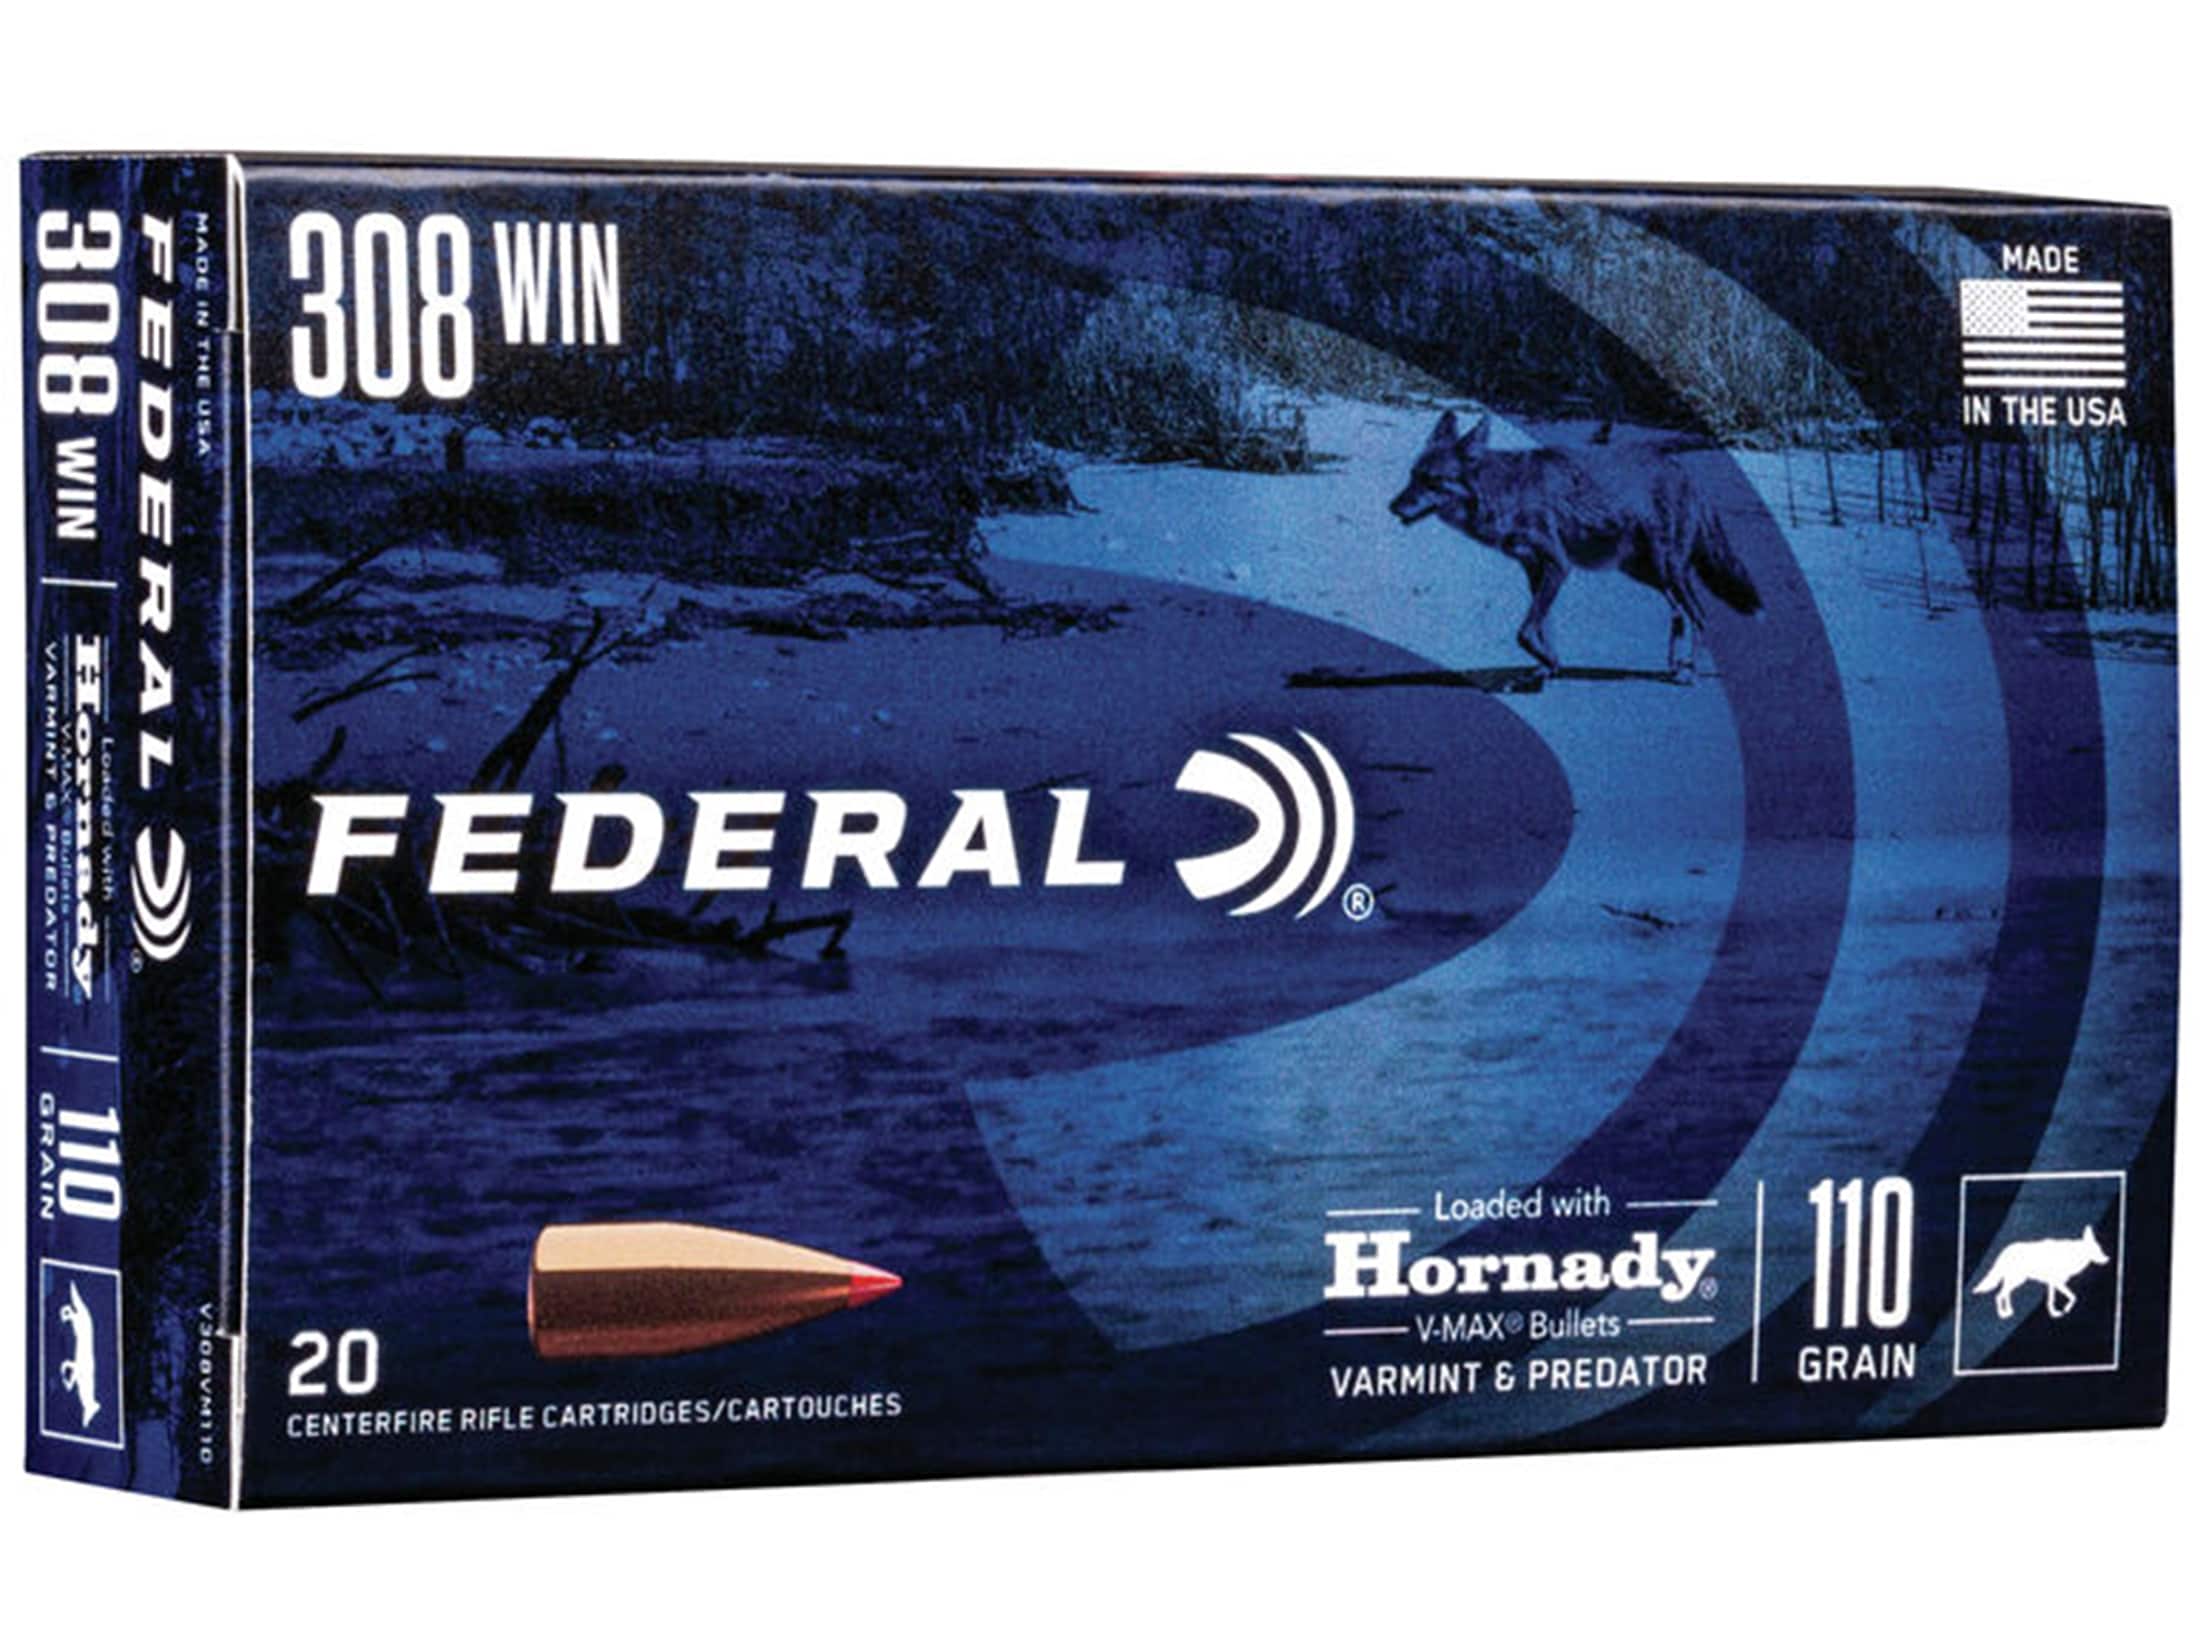 Federal Premium Ammunition 308 Winchester 110 Grain Hornady V-MAX